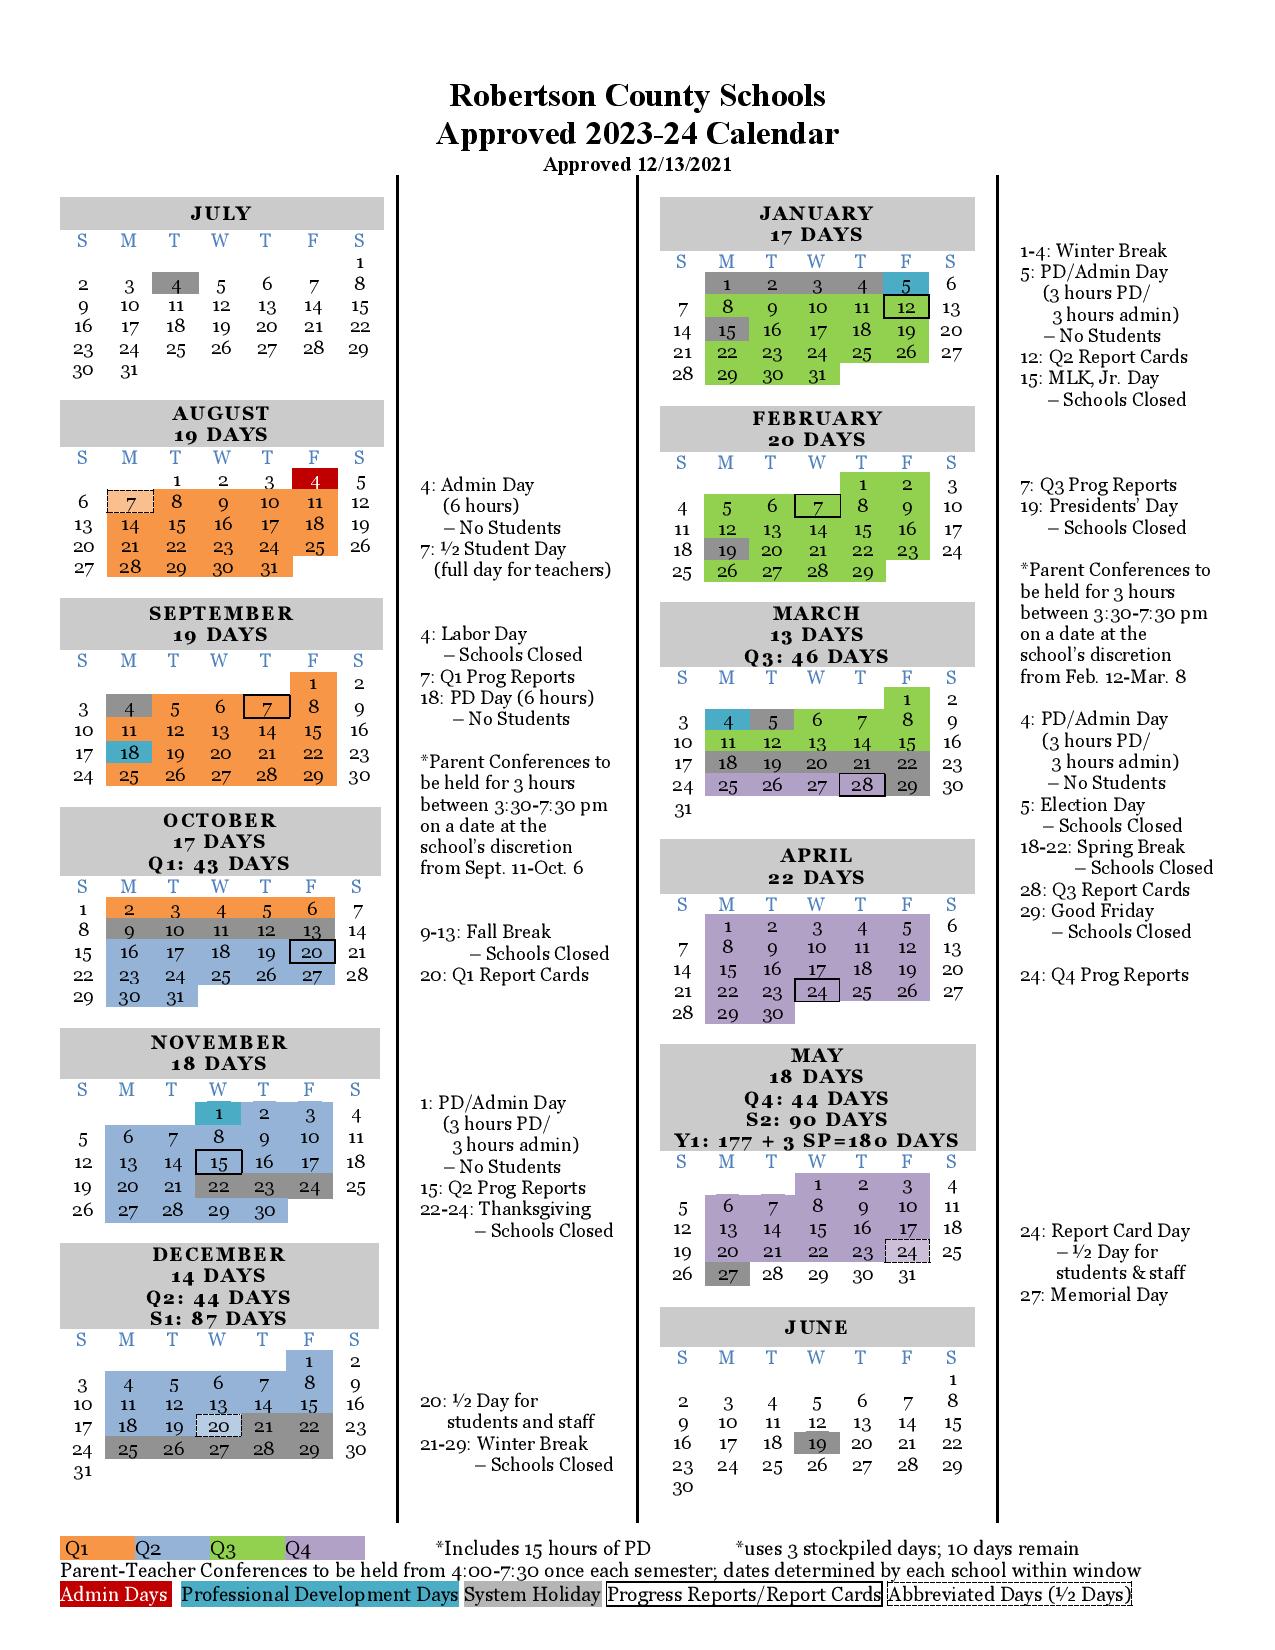 Robertson County Schools Calendar 2023-2024 in PDF